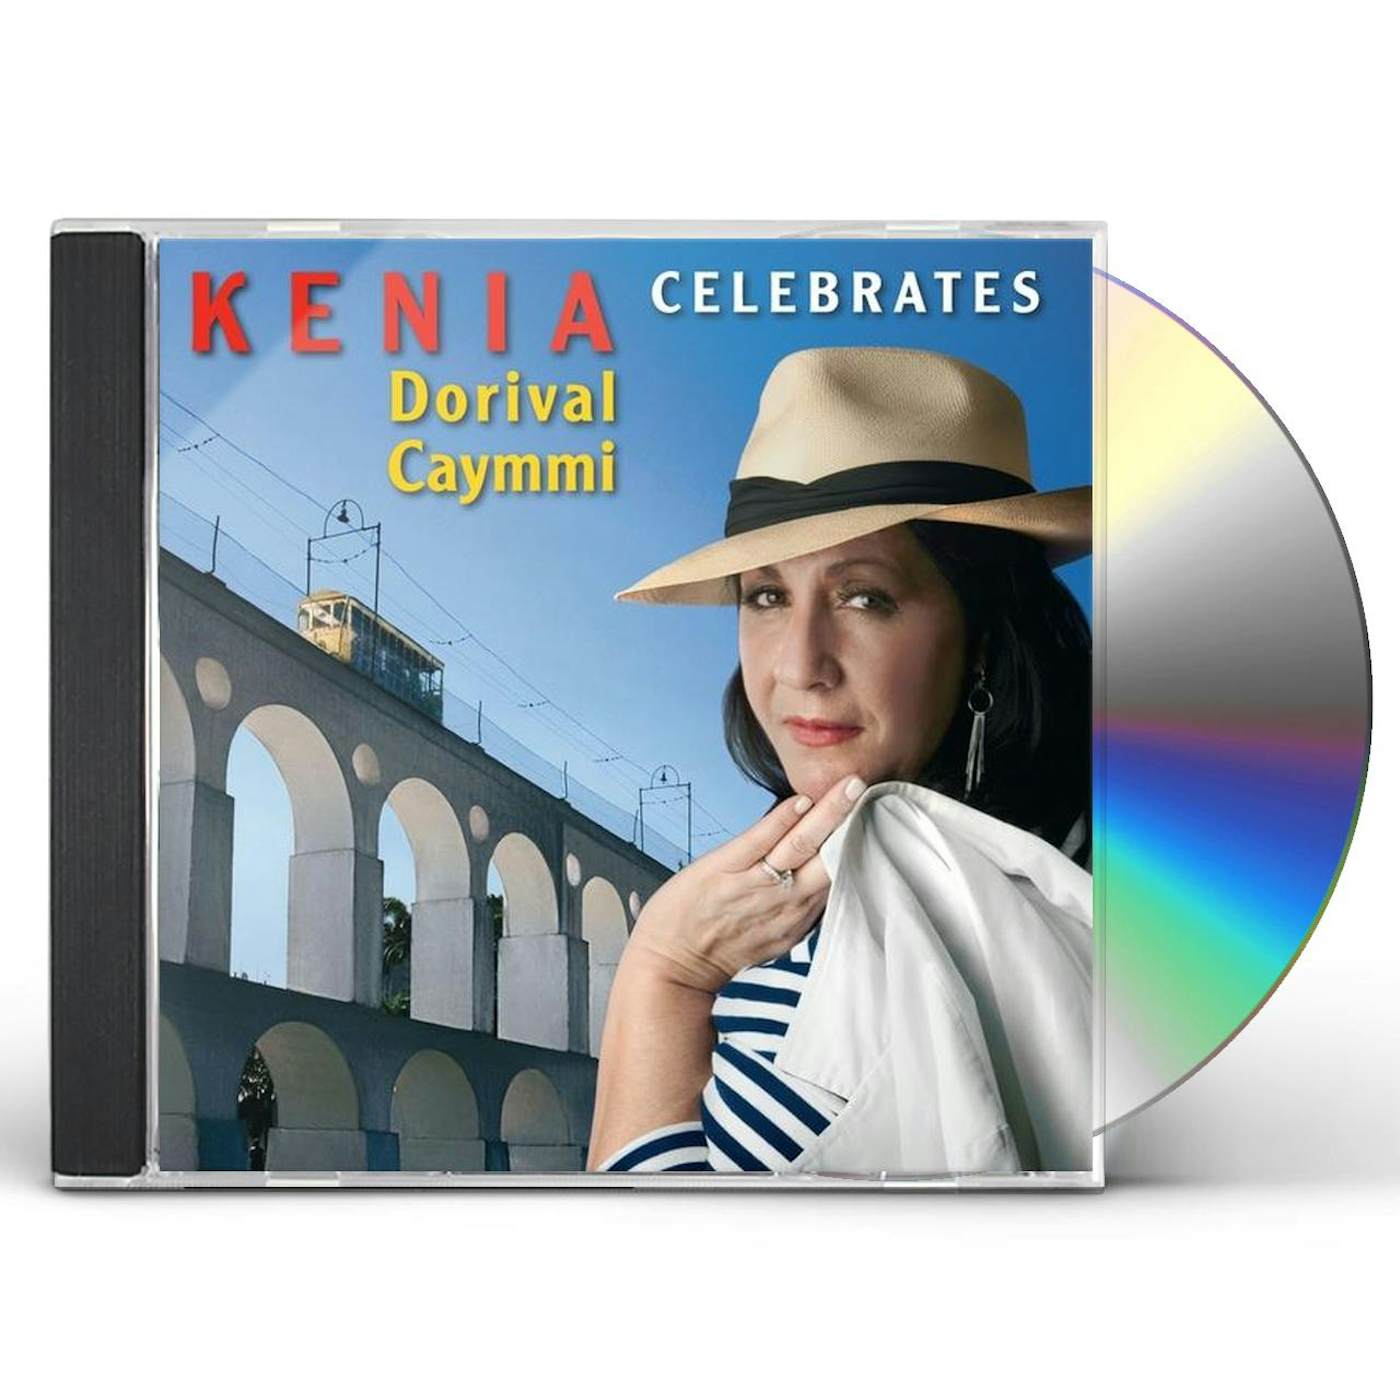 KENIA CELEBRATES DORIVAL CAYMMI CD